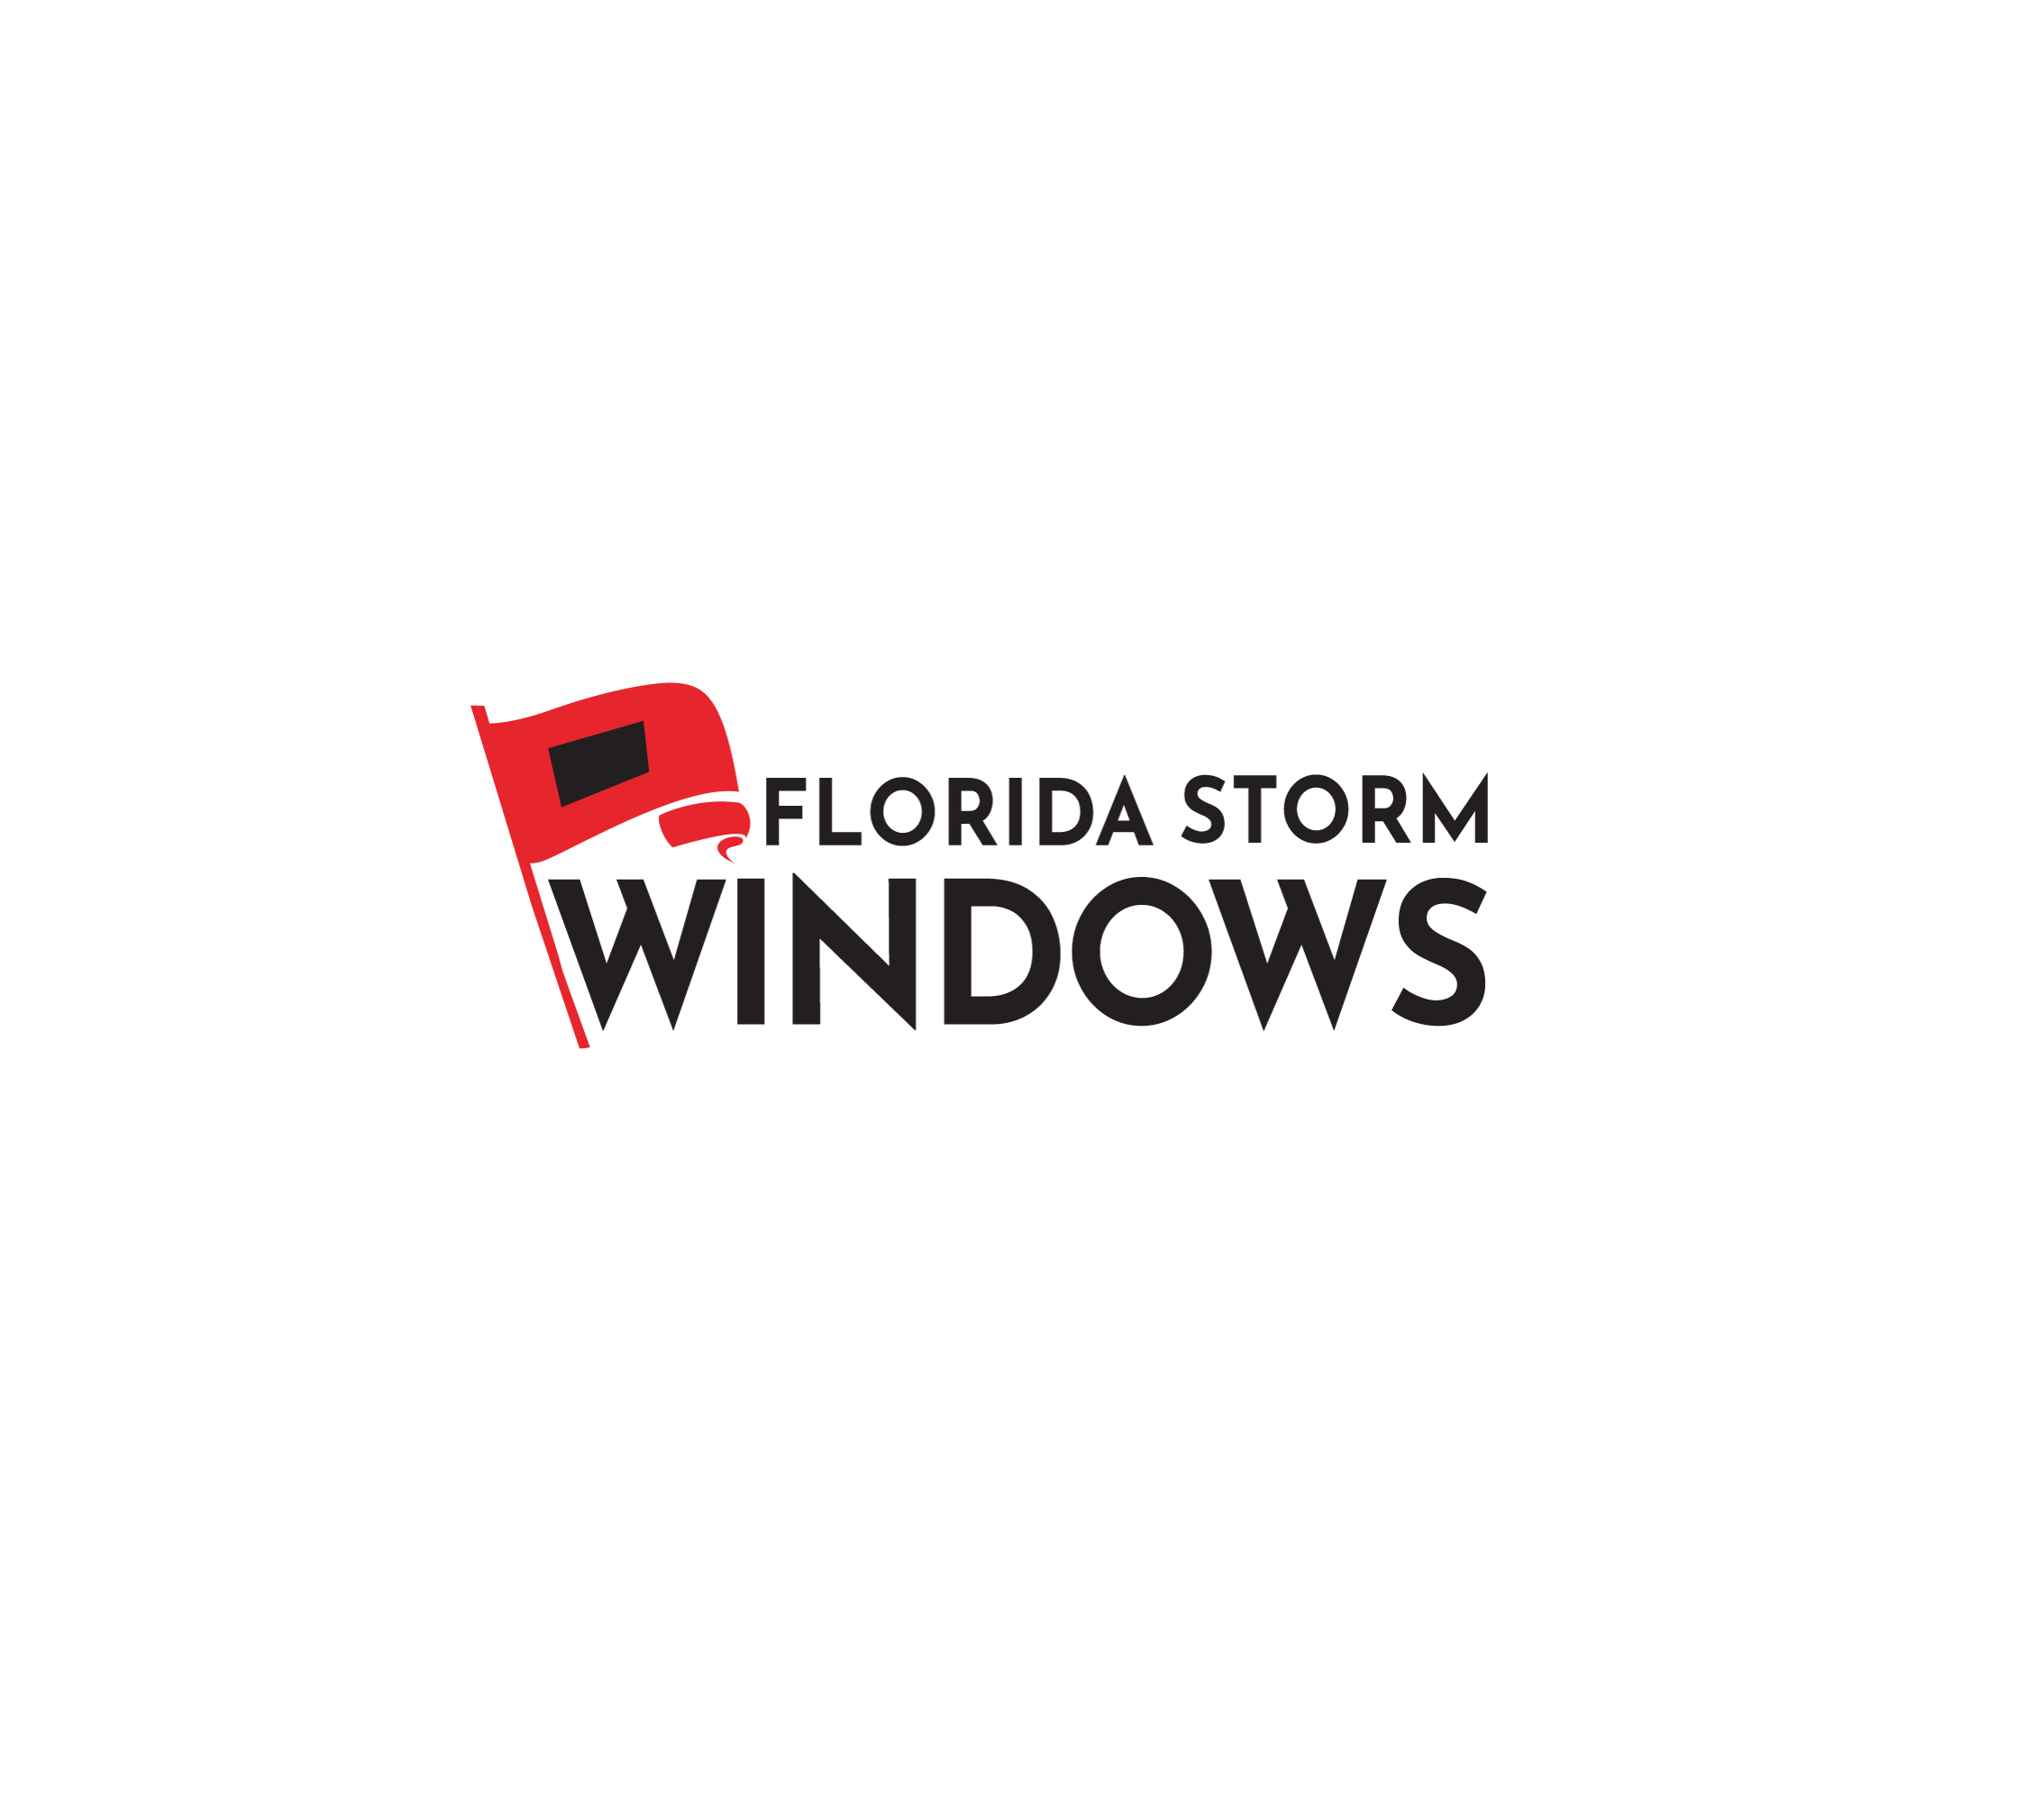 Florida Storm Windows logo